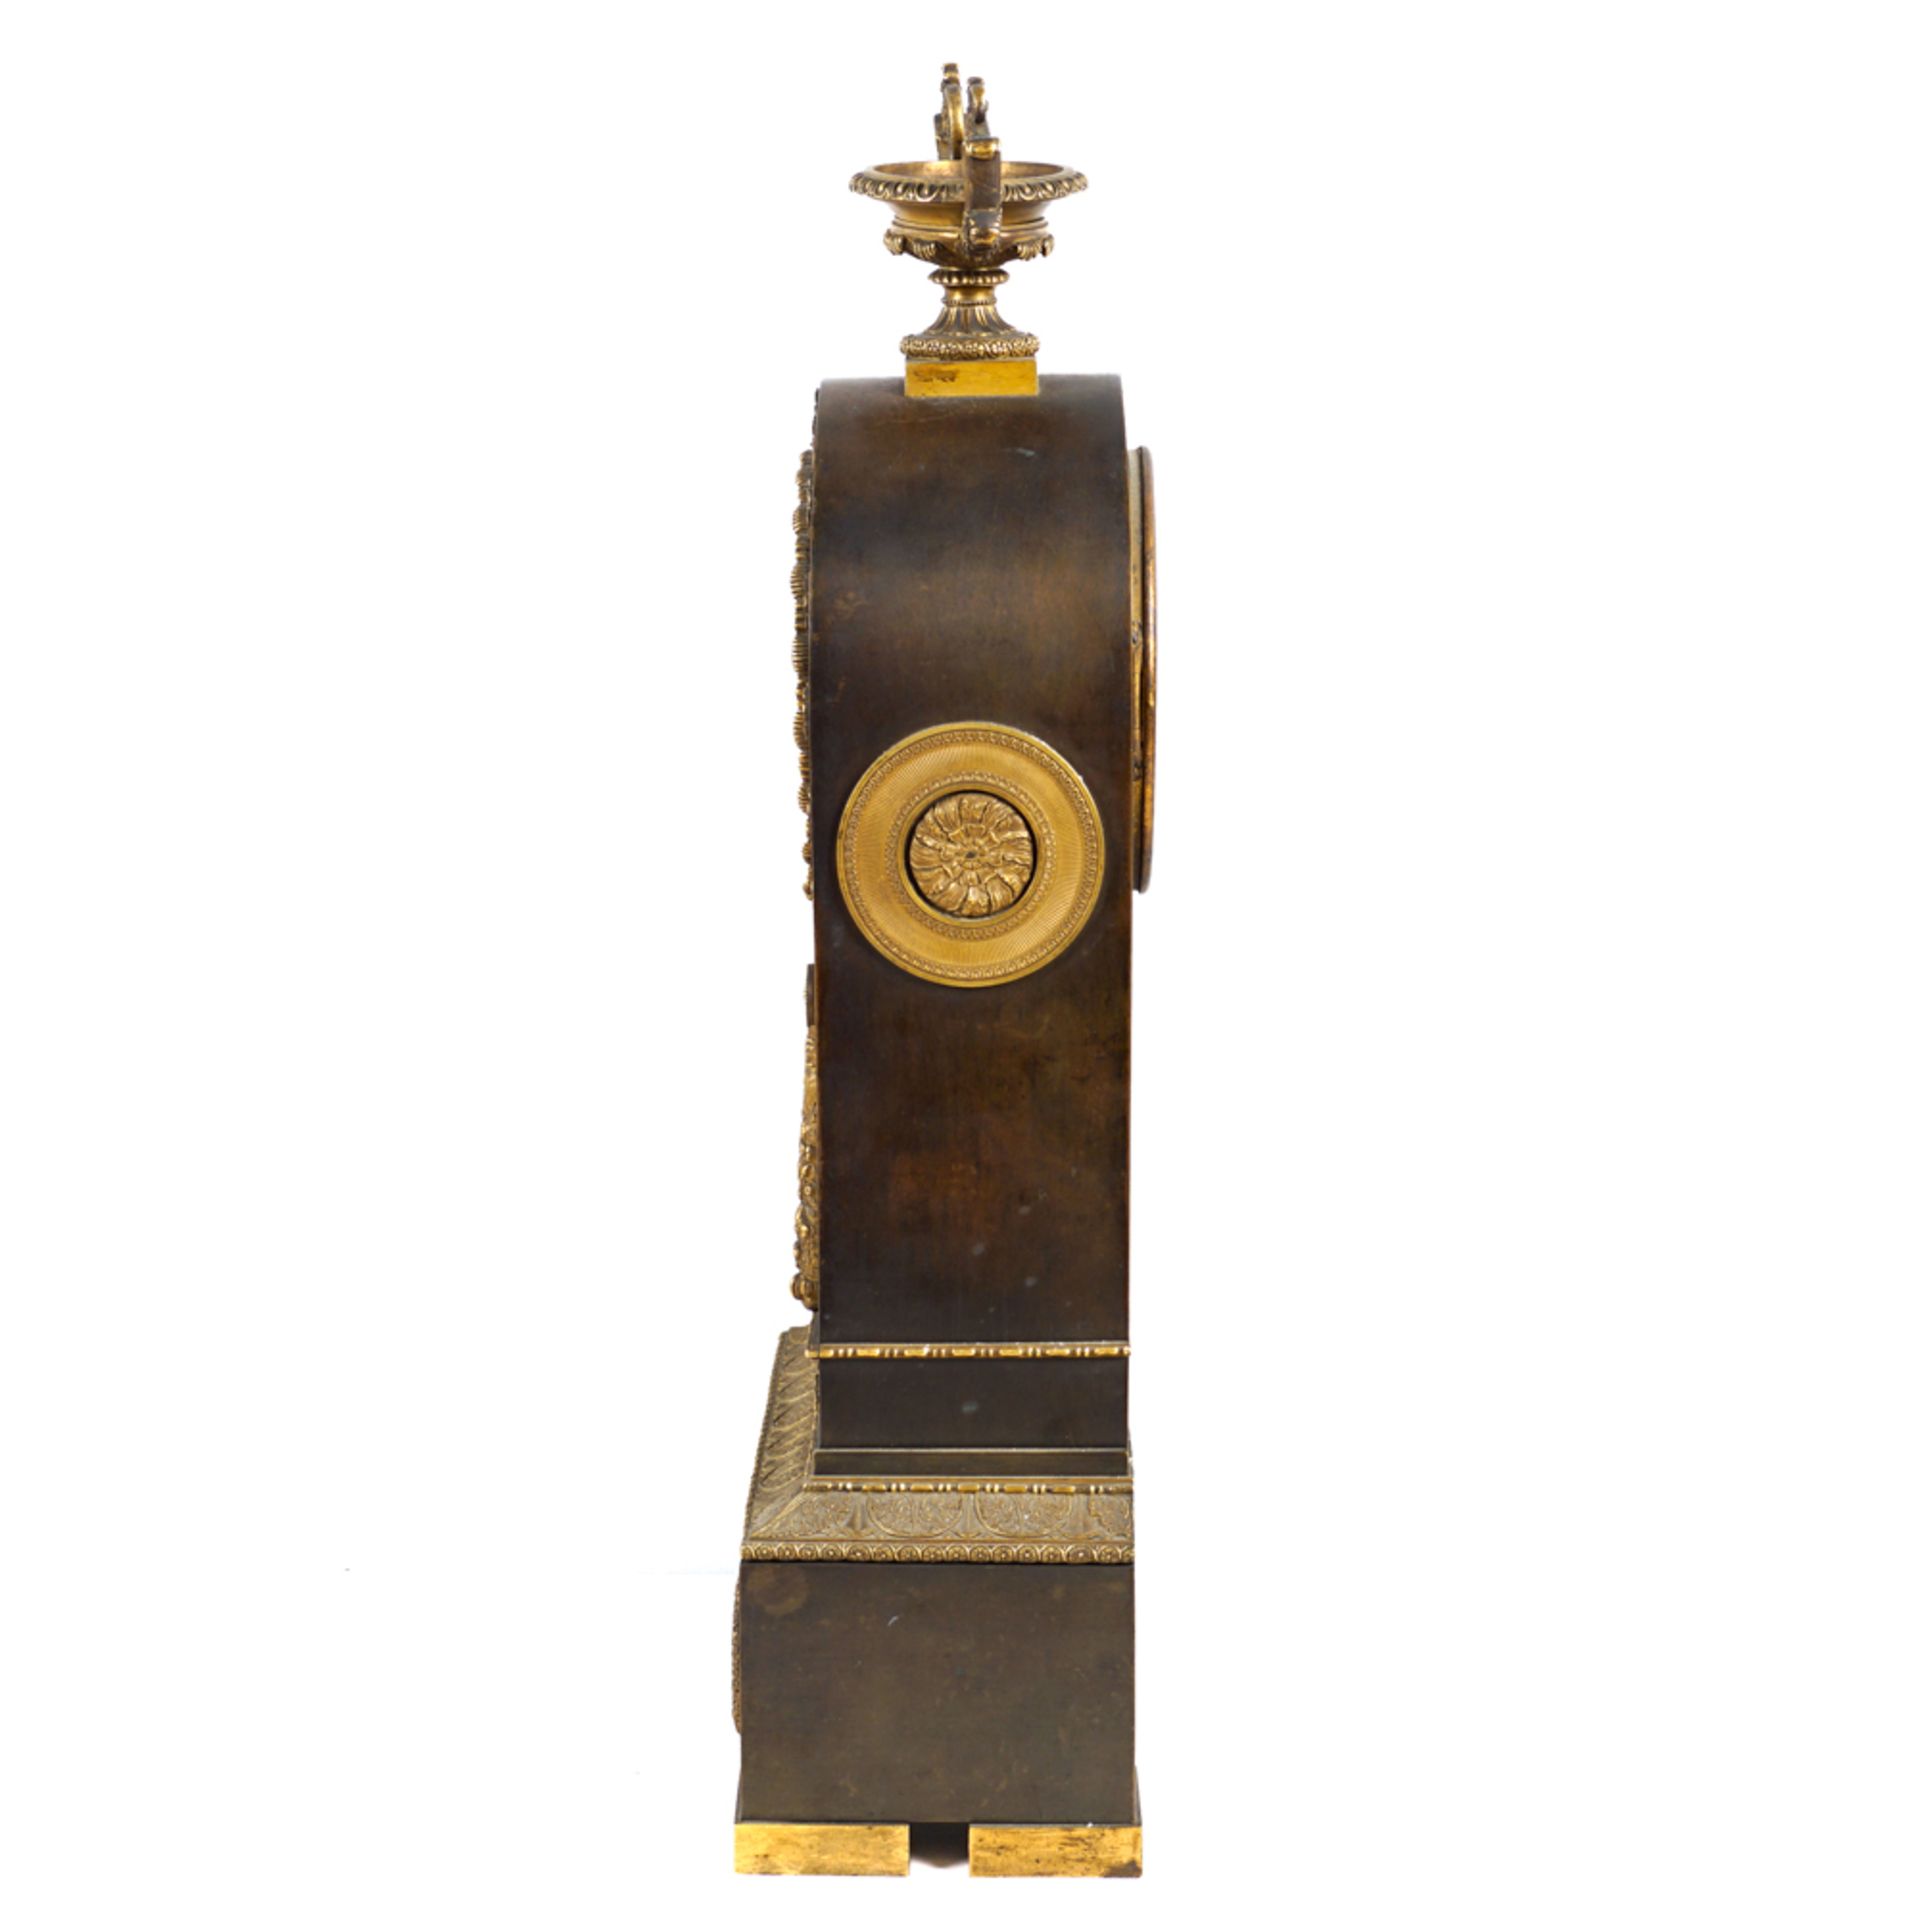 Gilt bronze mantel clock France, 19th century 55x25x12,5 cm. - Image 2 of 2